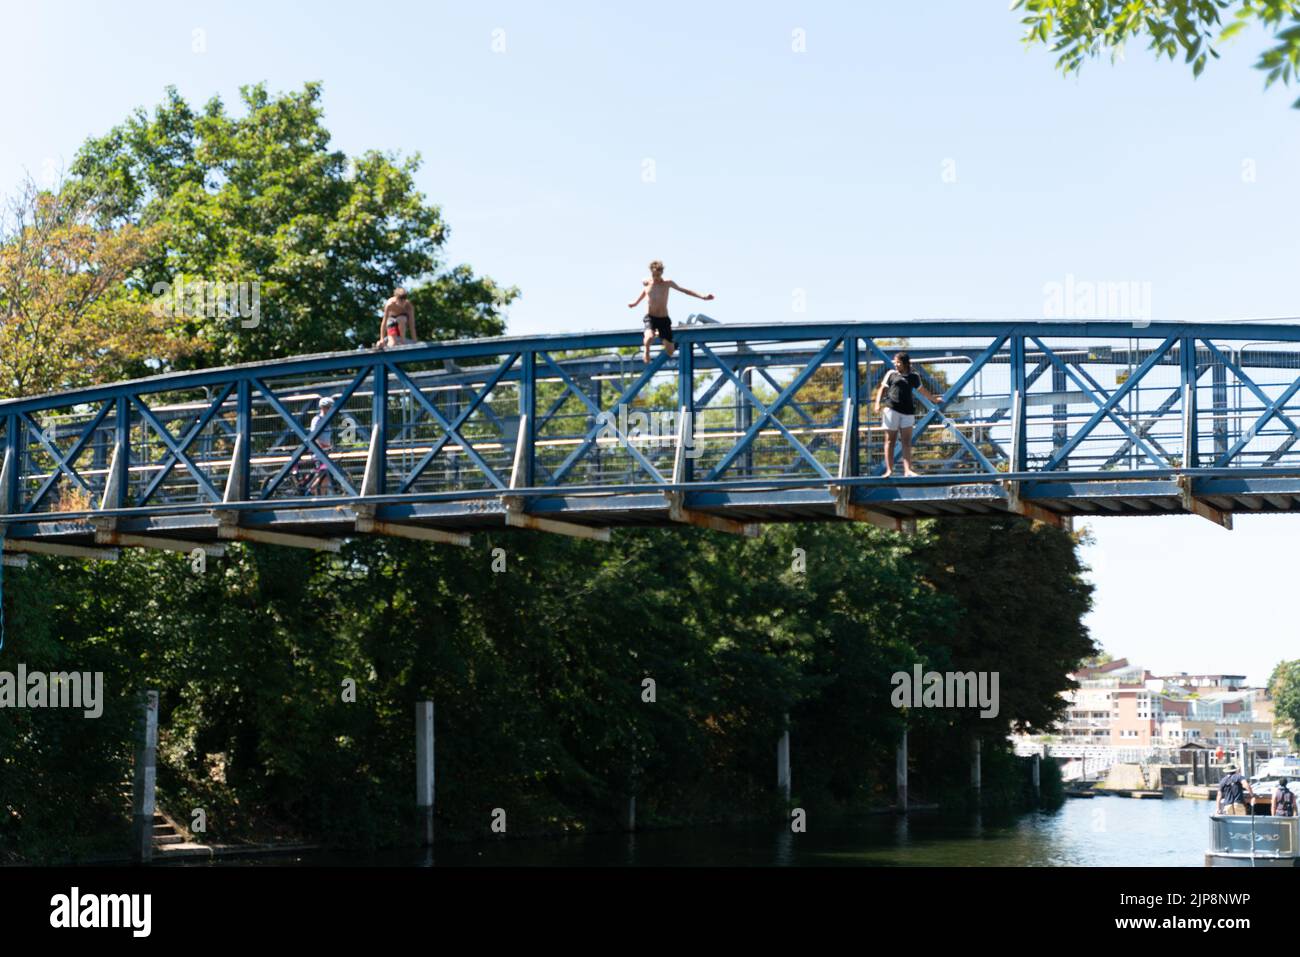 Boy Jumping From Bridge Stock Photo